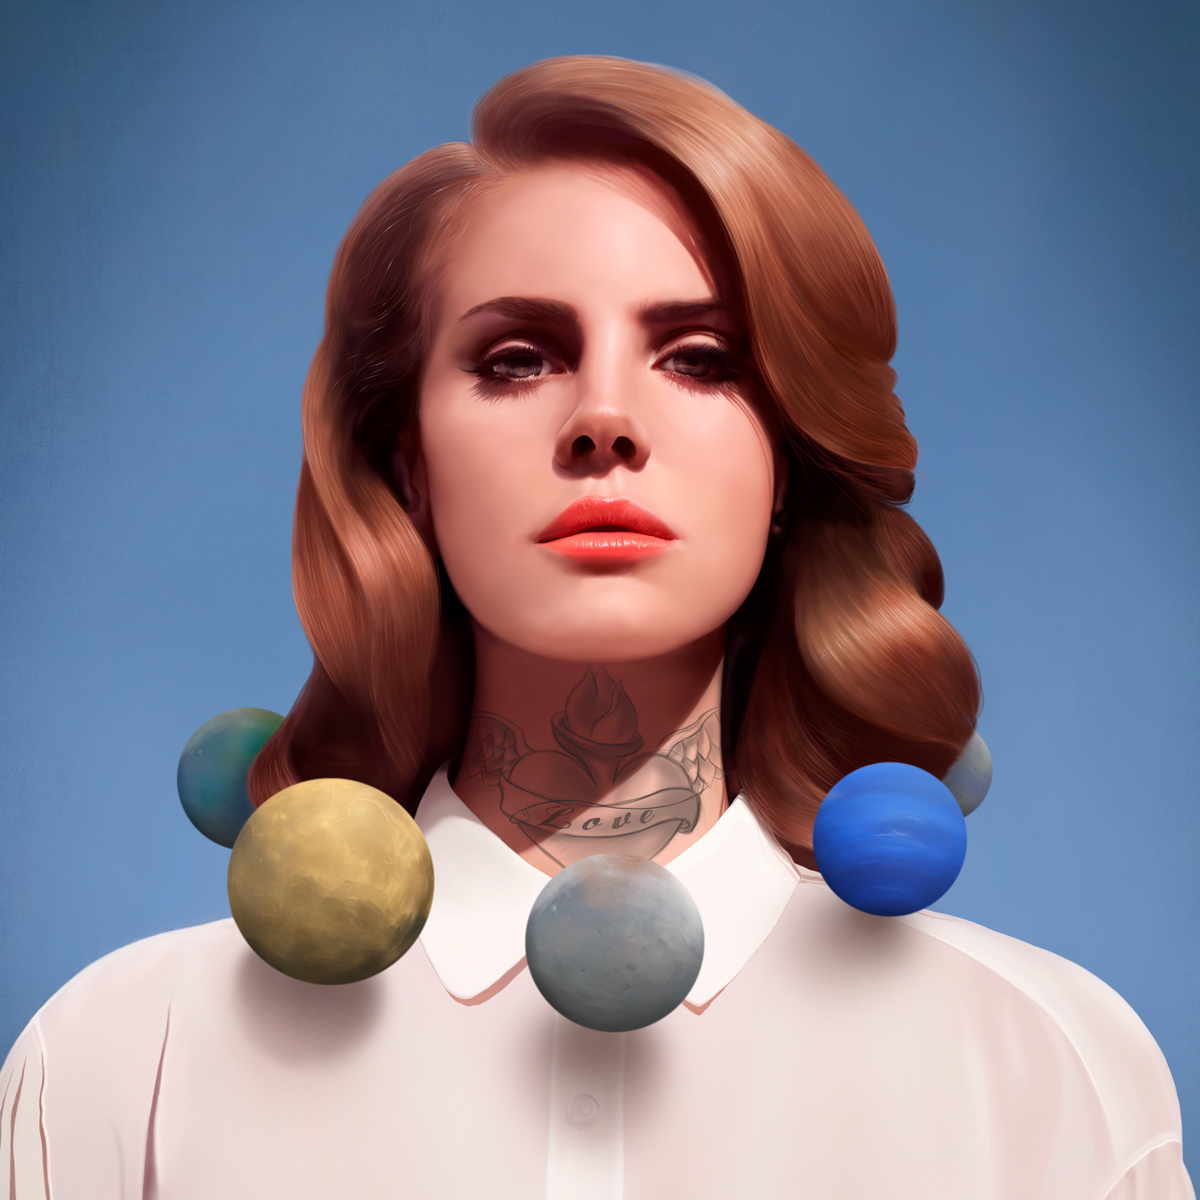 Lana Del Rey painting   art tejfelkrisztian ILLUSTRATION  girl la beauty Orbit Sun